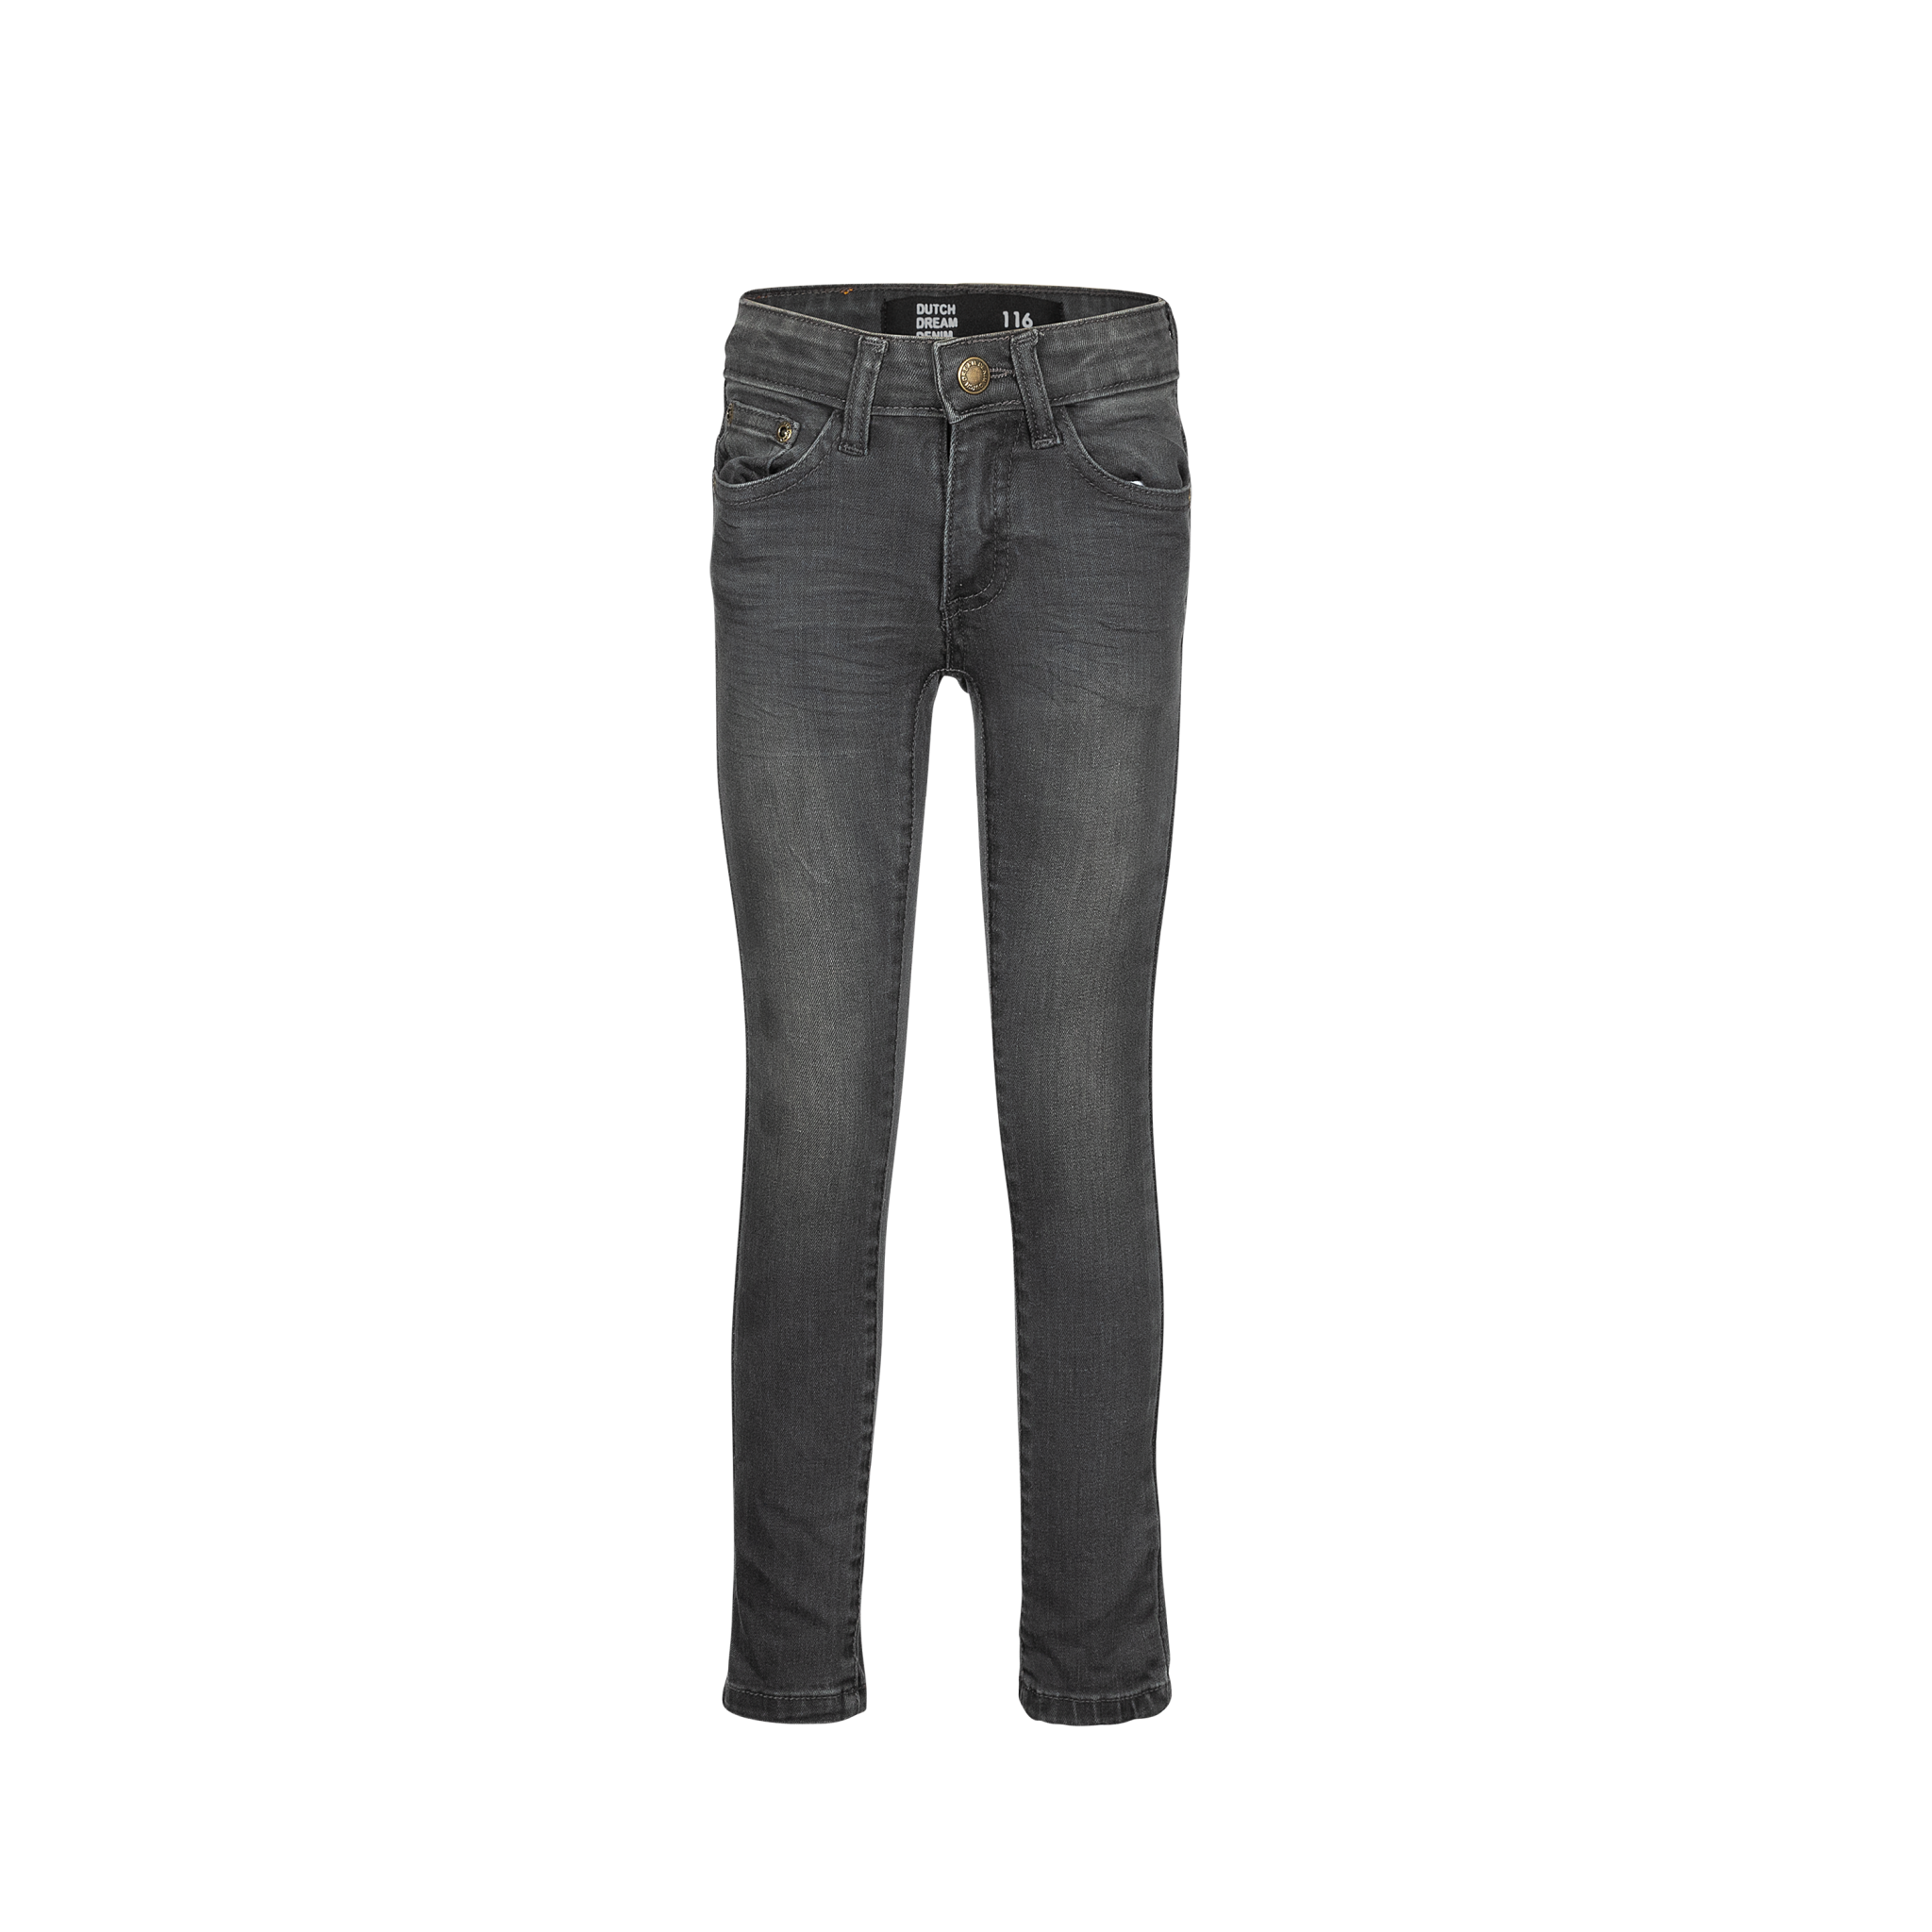 Afbeelding van Dutch Dream Denim Meiden jeans janga skinny fit